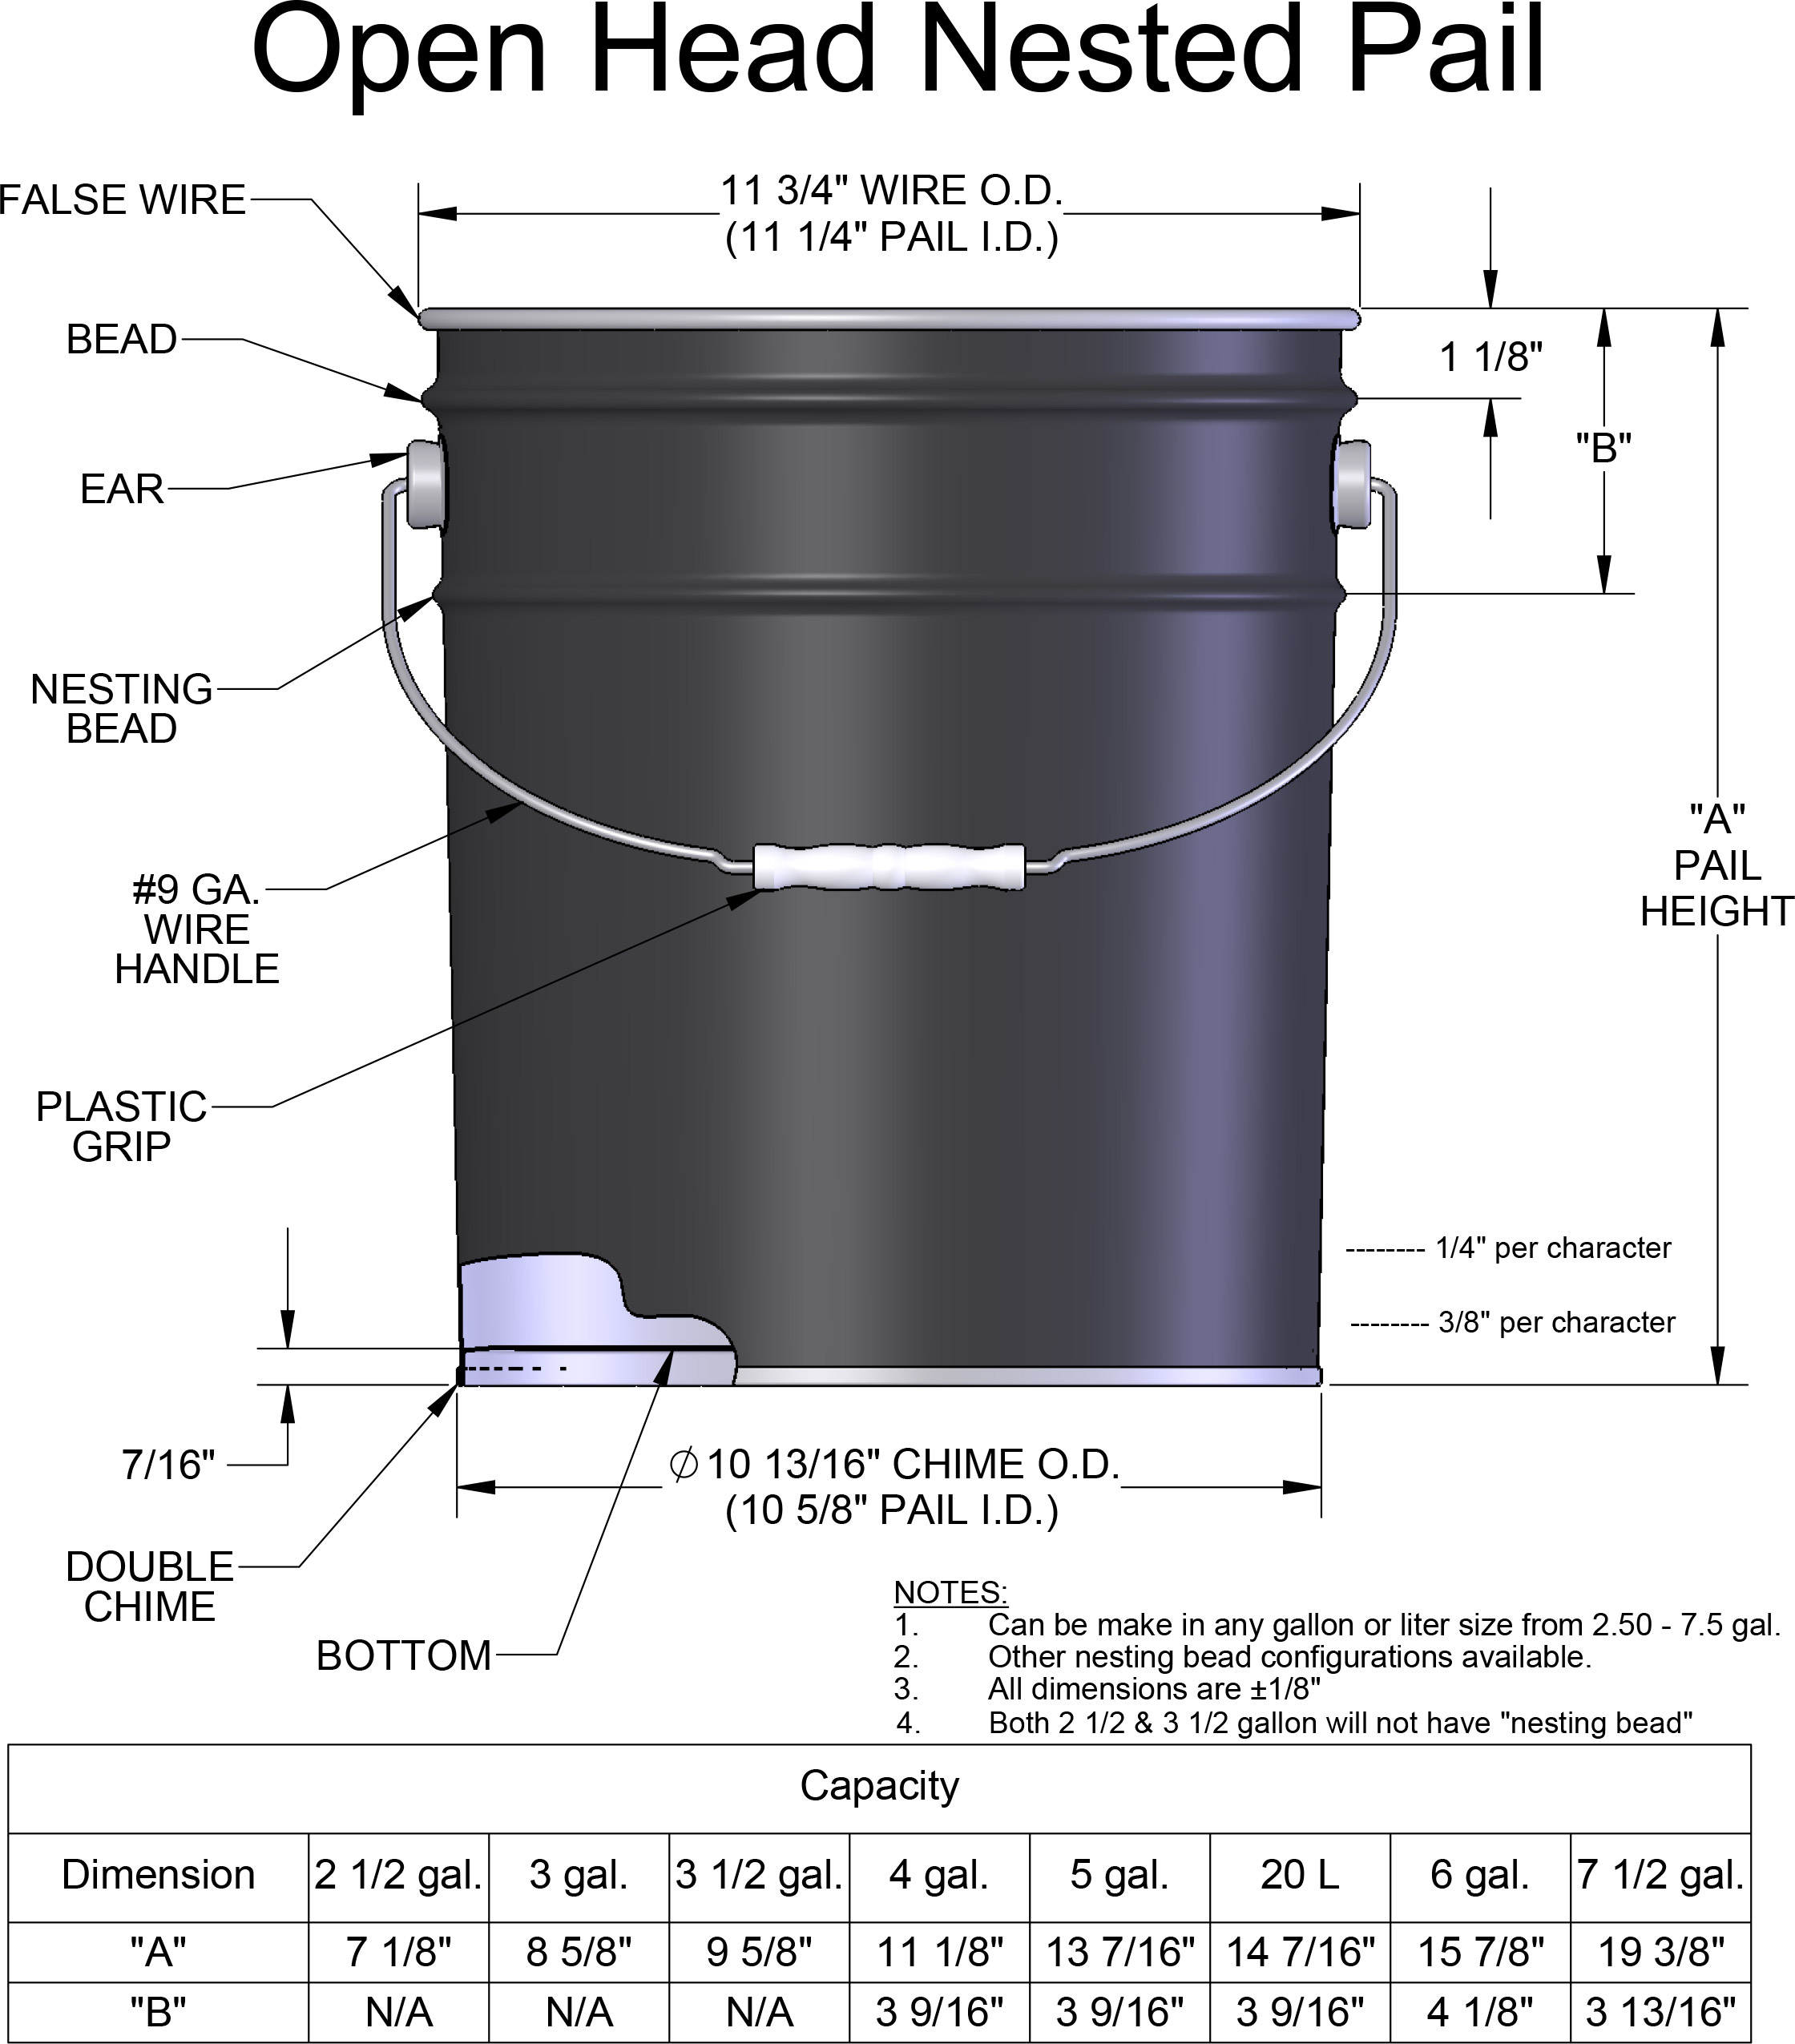 how tall is a 5 gallon bucket